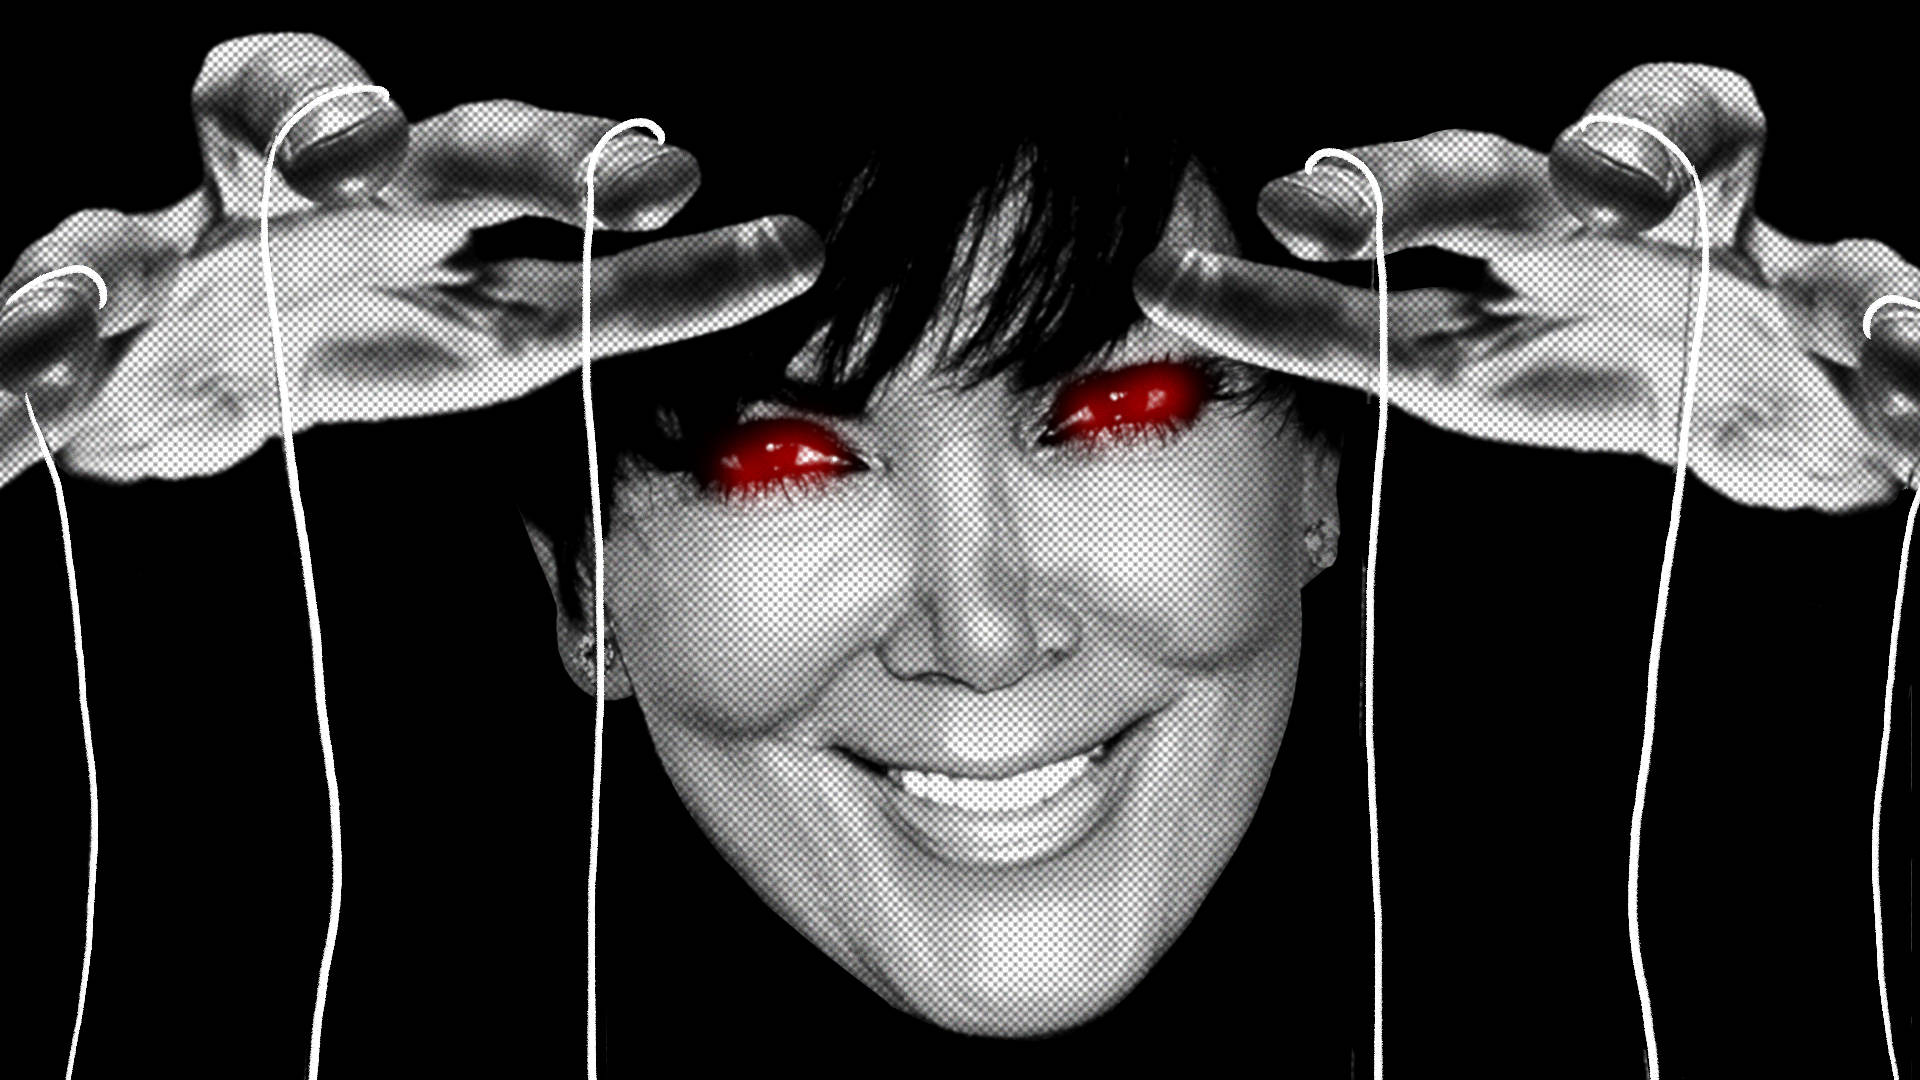 Kris Jenner With Glowing Eyes Wallpaper